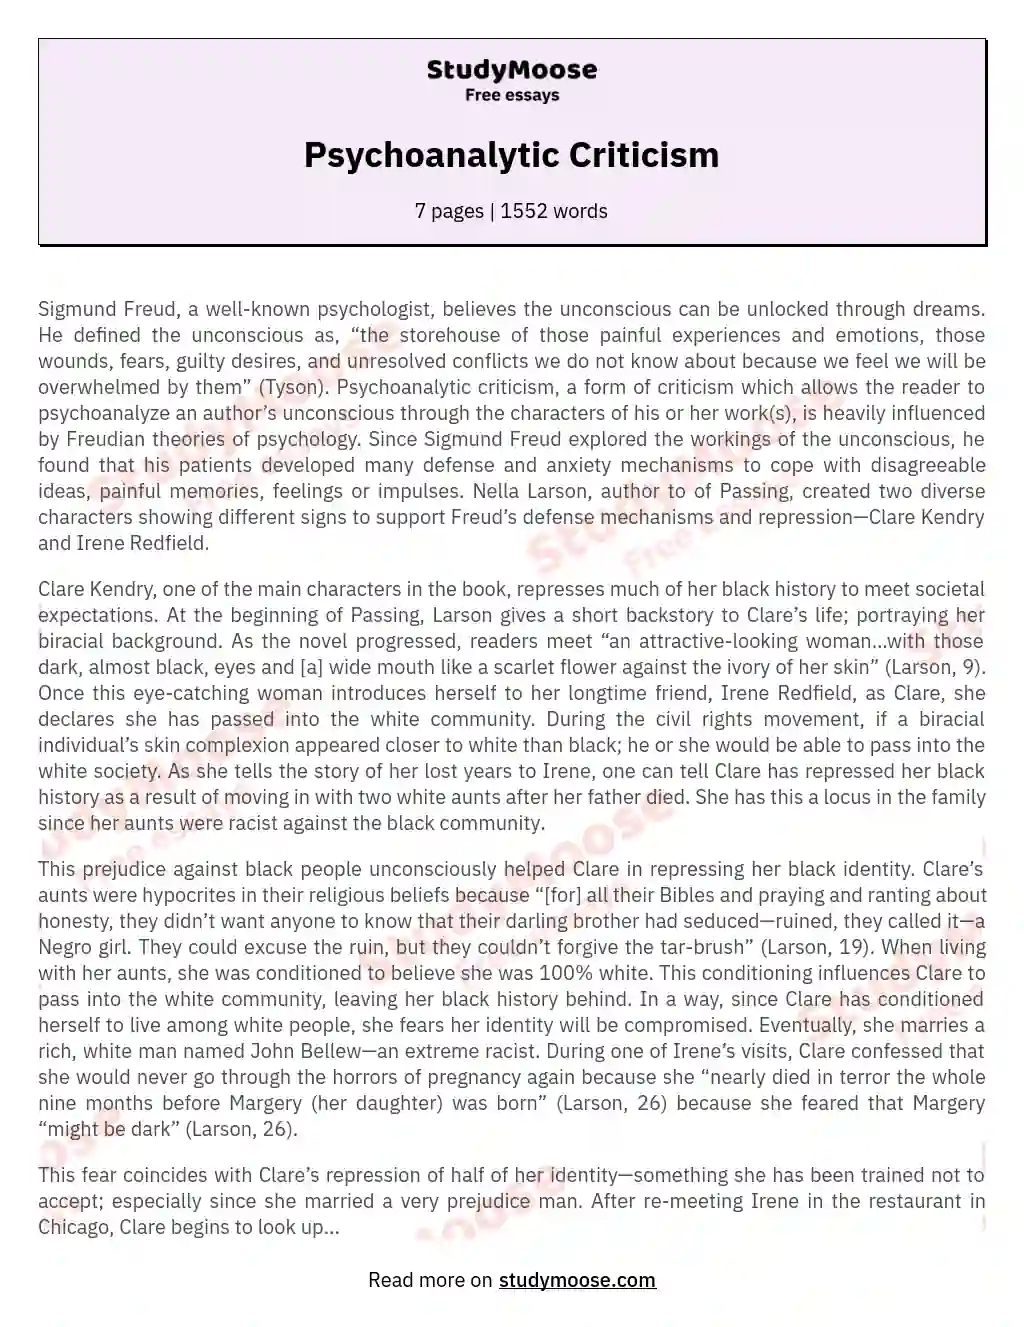 Psychoanalytic Criticism essay